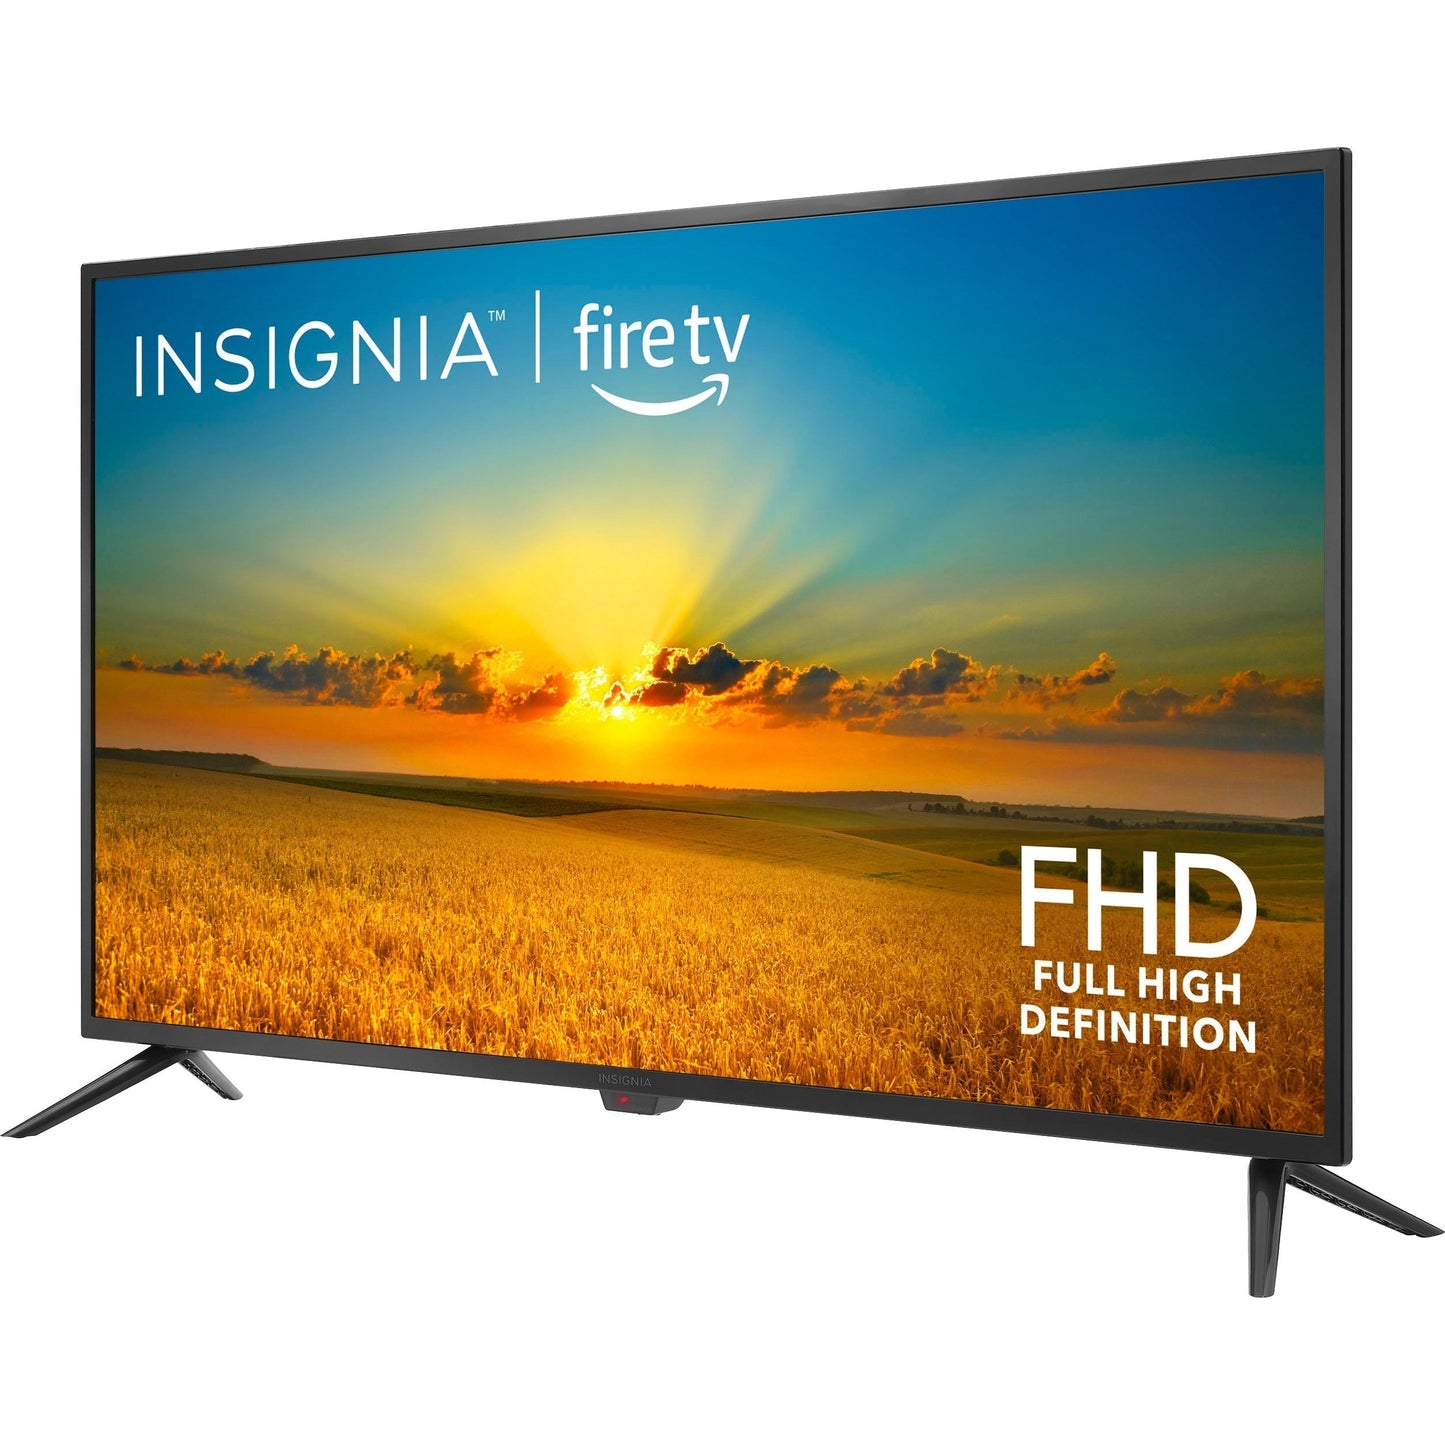 Insignia 42" LED Full HD Smart Fire TV